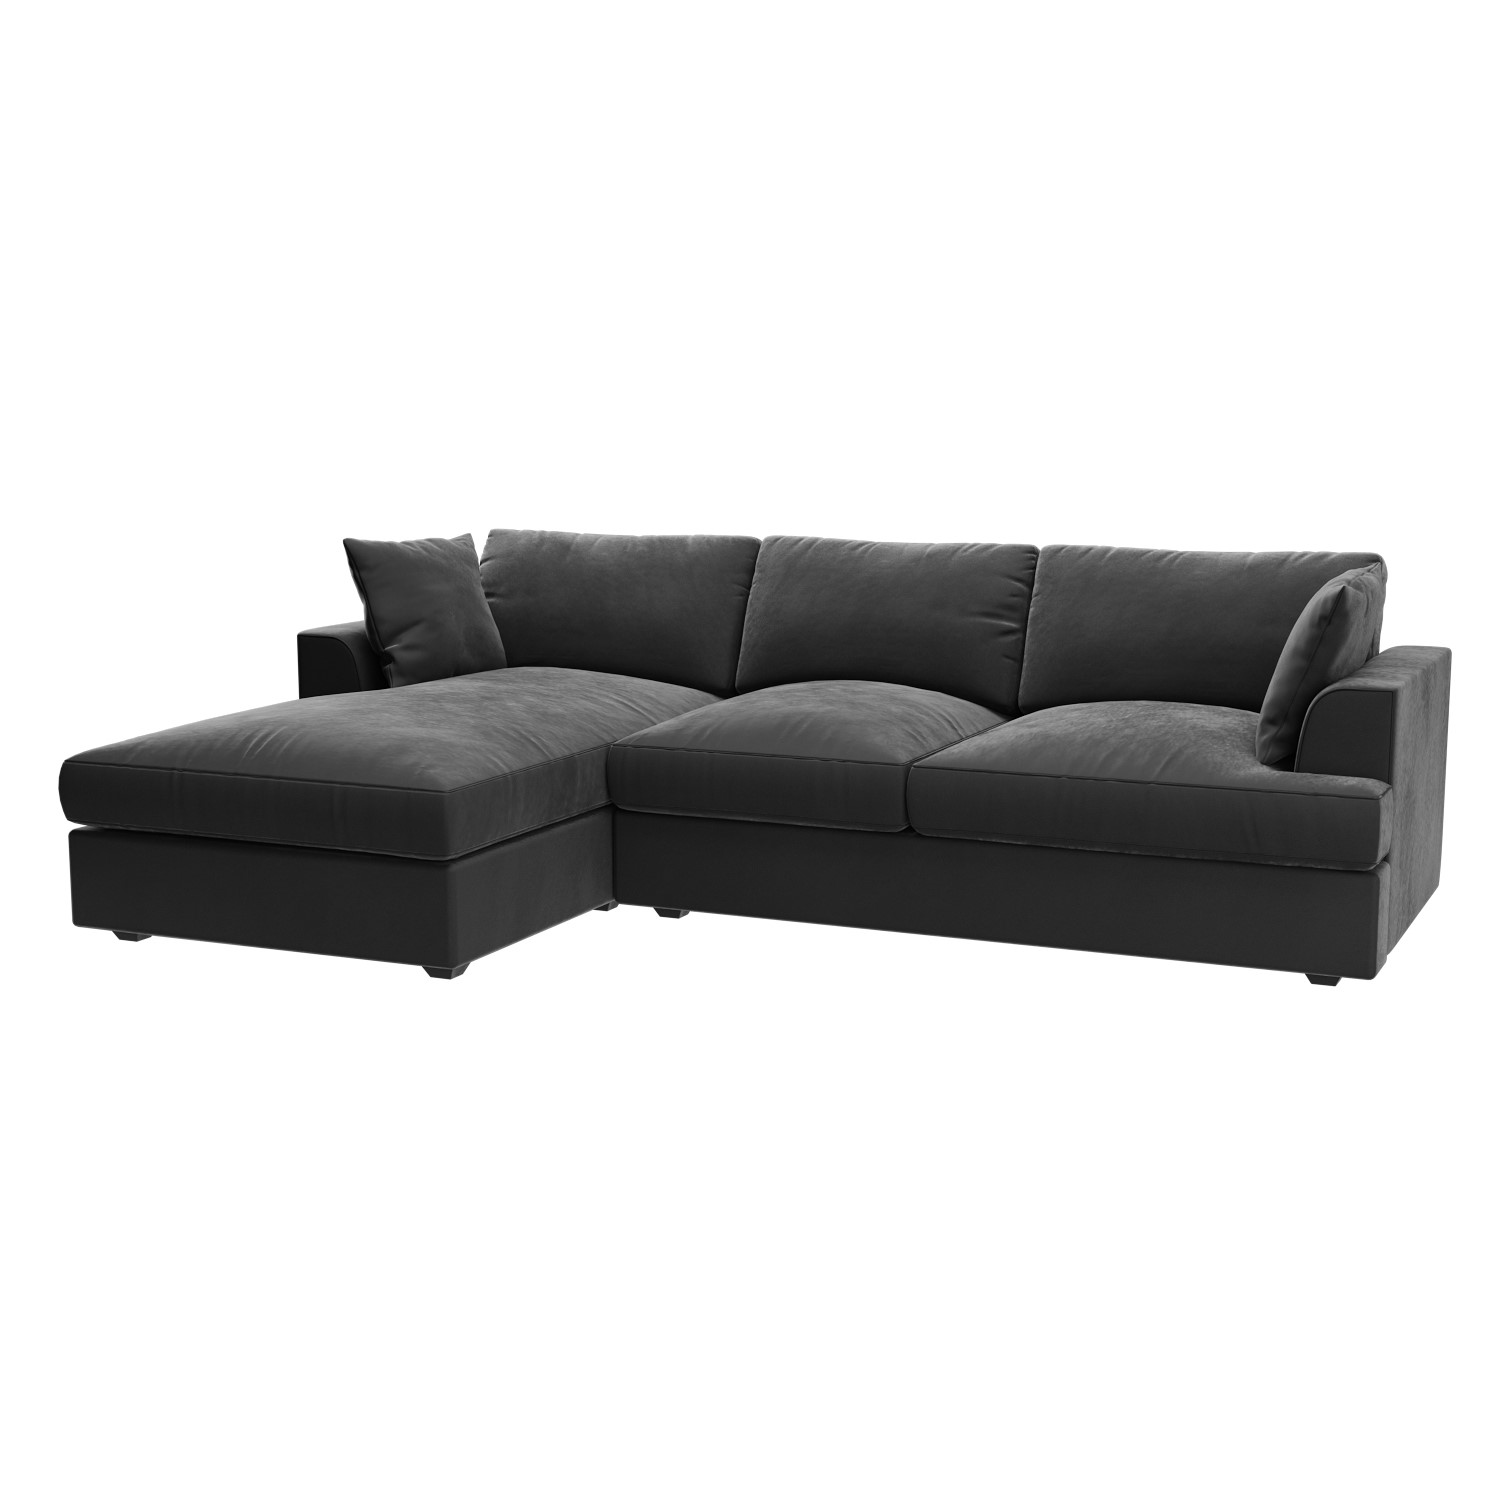 Photo of Dark grey velvet left hand l shaped sofa - seats 4 - august